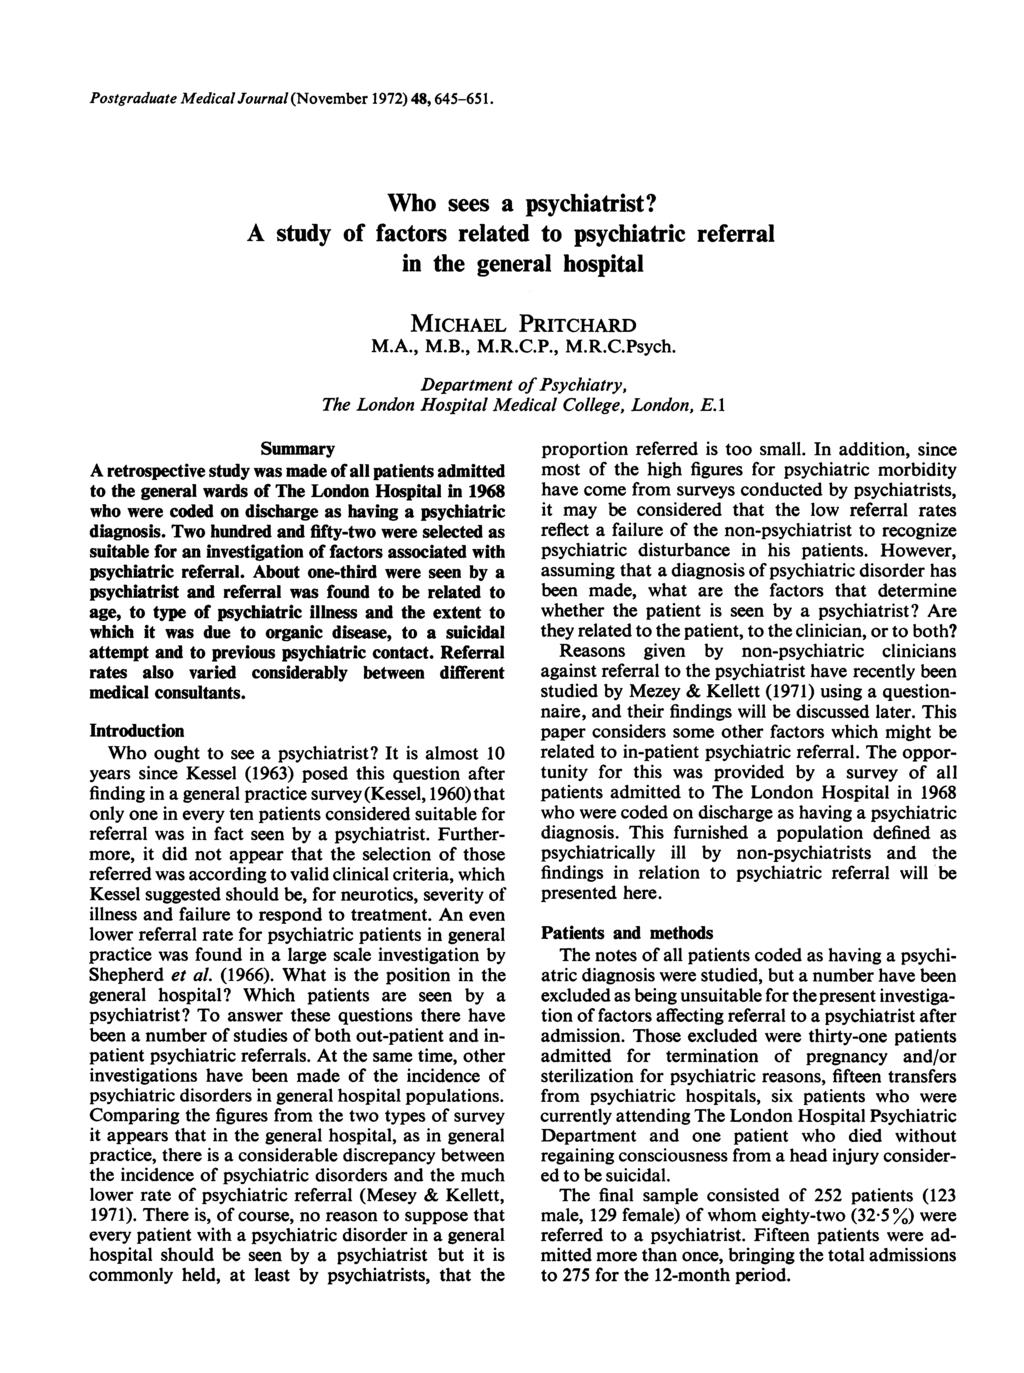 Postgraduate Medical Journal (November 1972) 48, 645-651. Who sees a psychiatrist?